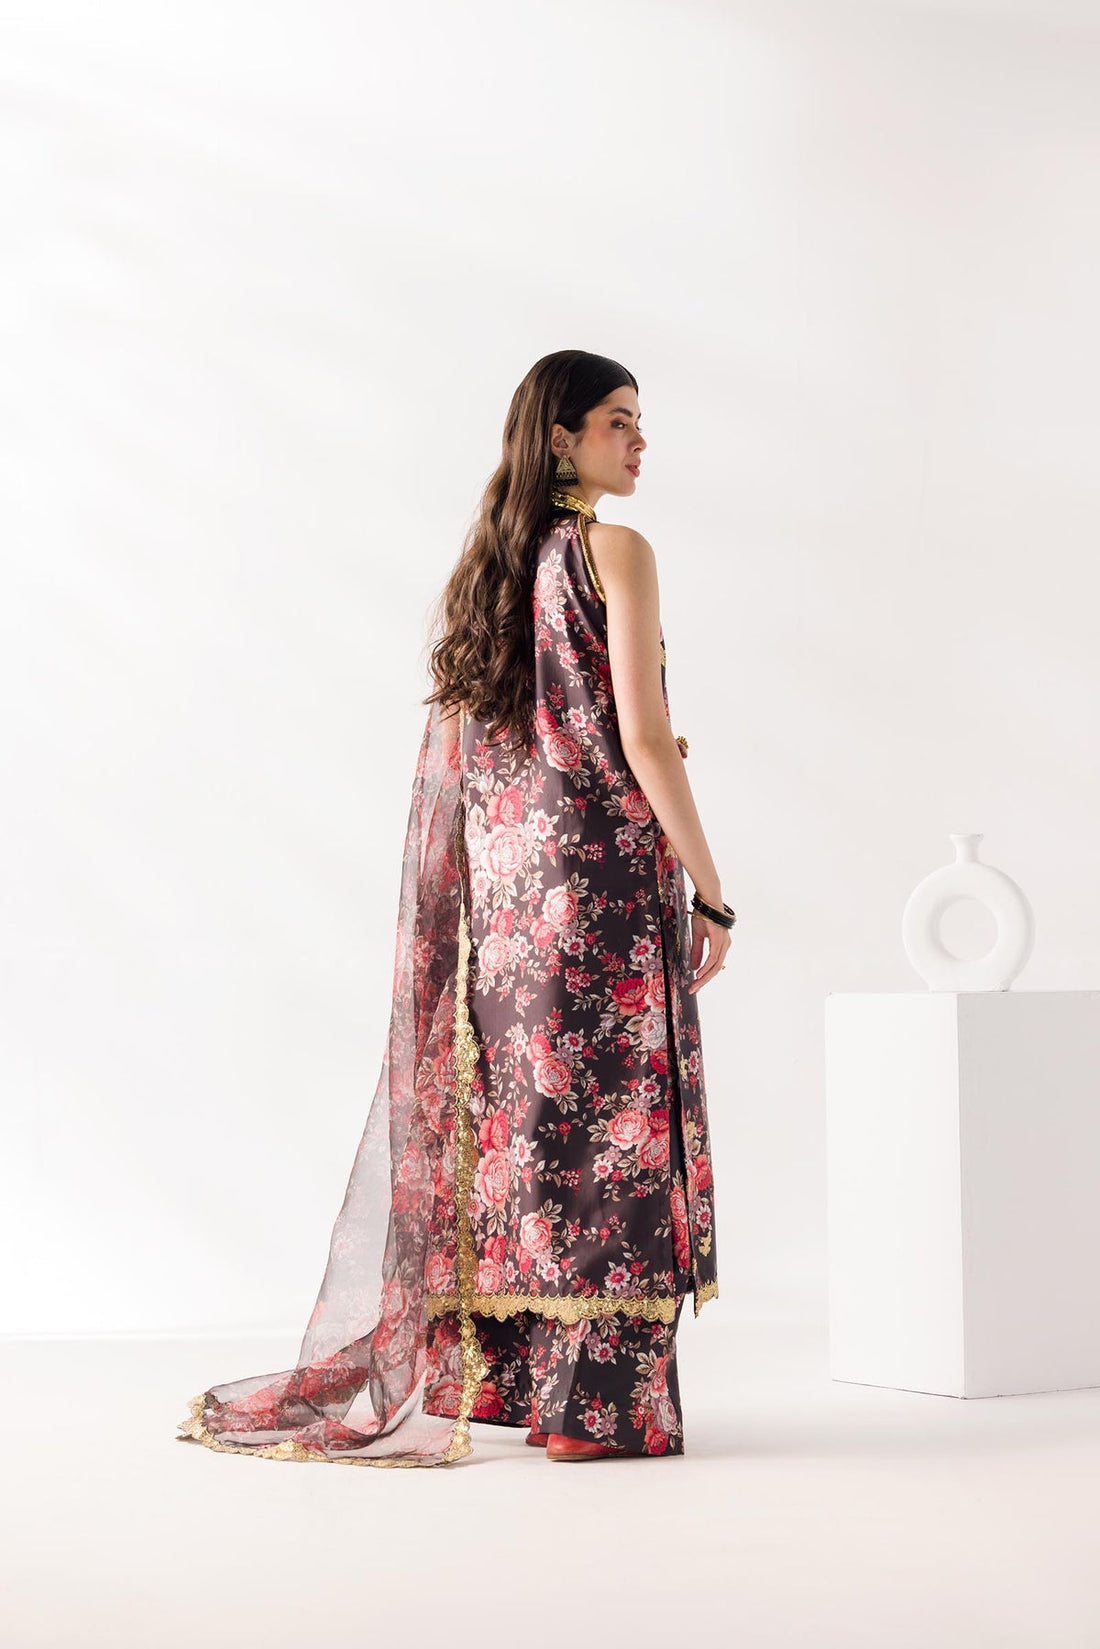 TaanaBaana | Luxe Line | F0395 - Khanumjan  Pakistani Clothes and Designer Dresses in UK, USA 